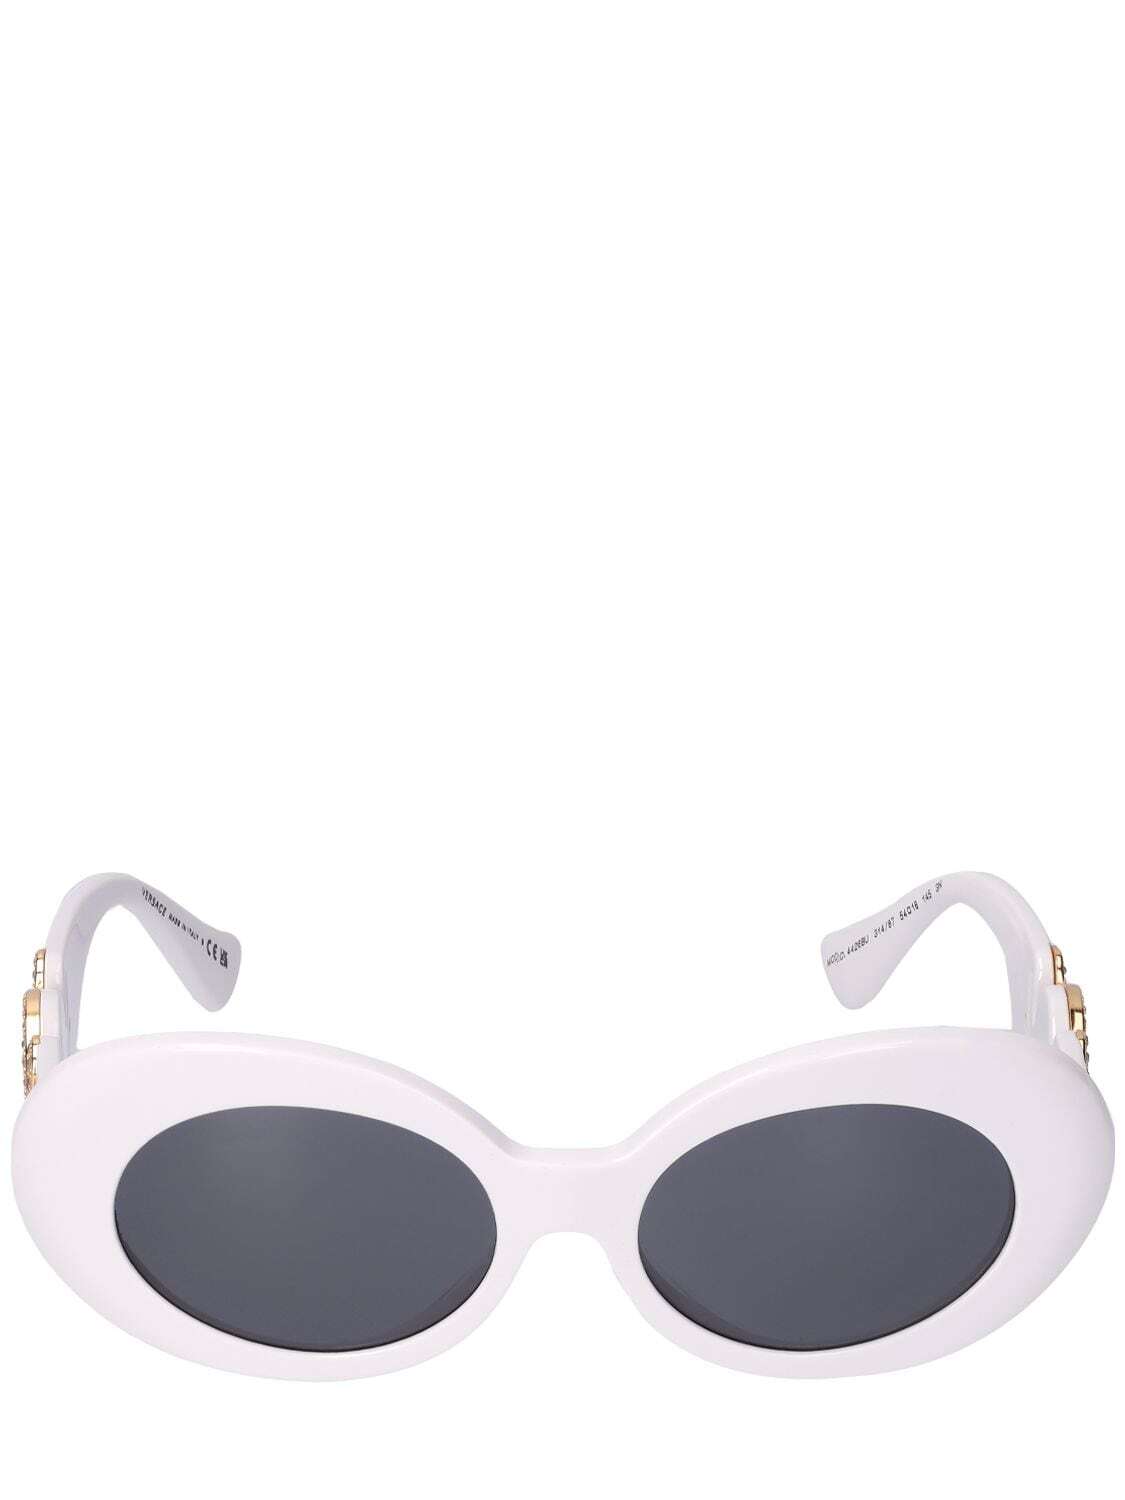 VERSACE Medusa Biggie Crystal Oval Sunglasses in grey / white